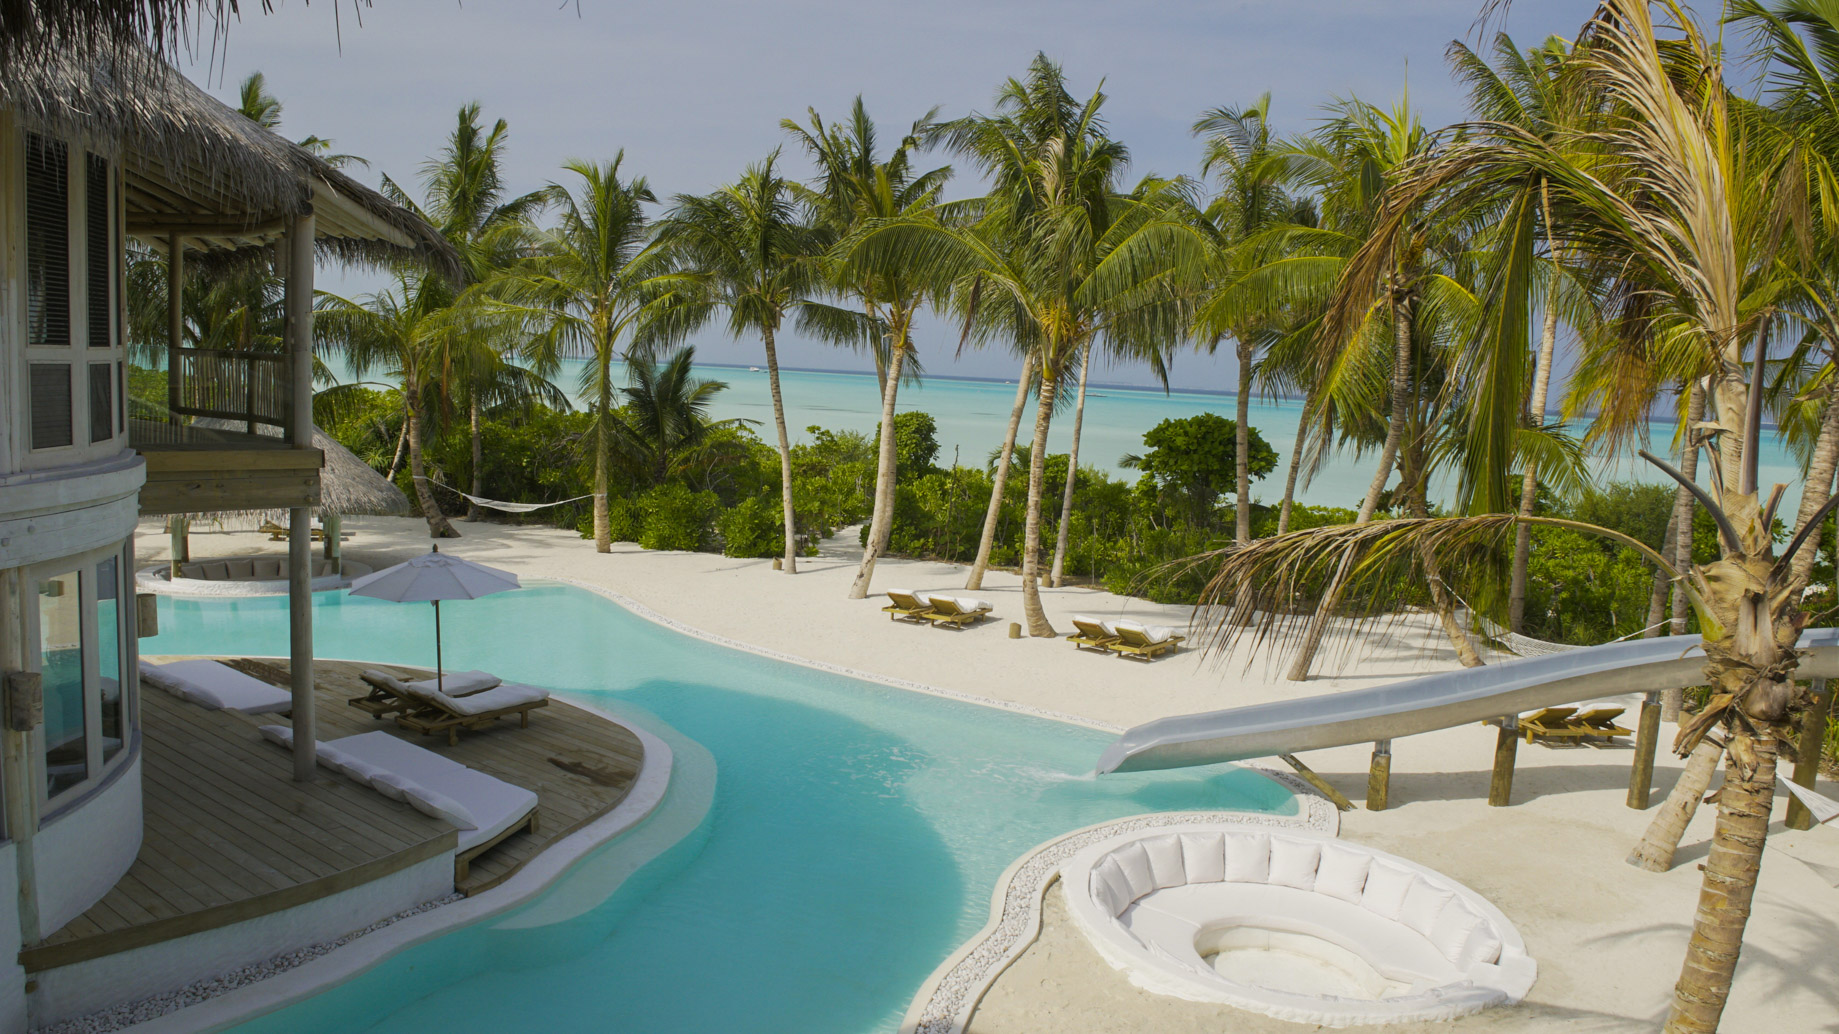 Soneva Jani Resort – Noonu Atoll, Medhufaru, Maldives – 4 Bedroom Island Reserve Villa Beachfront Pool Water Slide